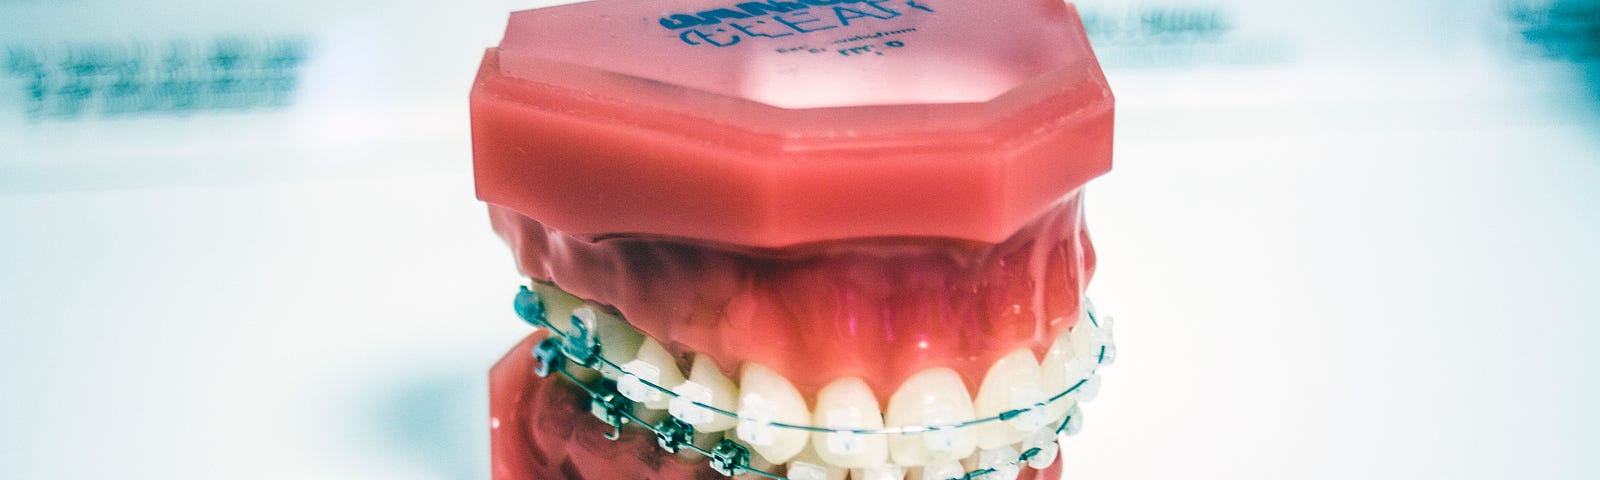 The HR Smile banner image showing teeth in braces (TLTW; Samuel Edward Koranteng)